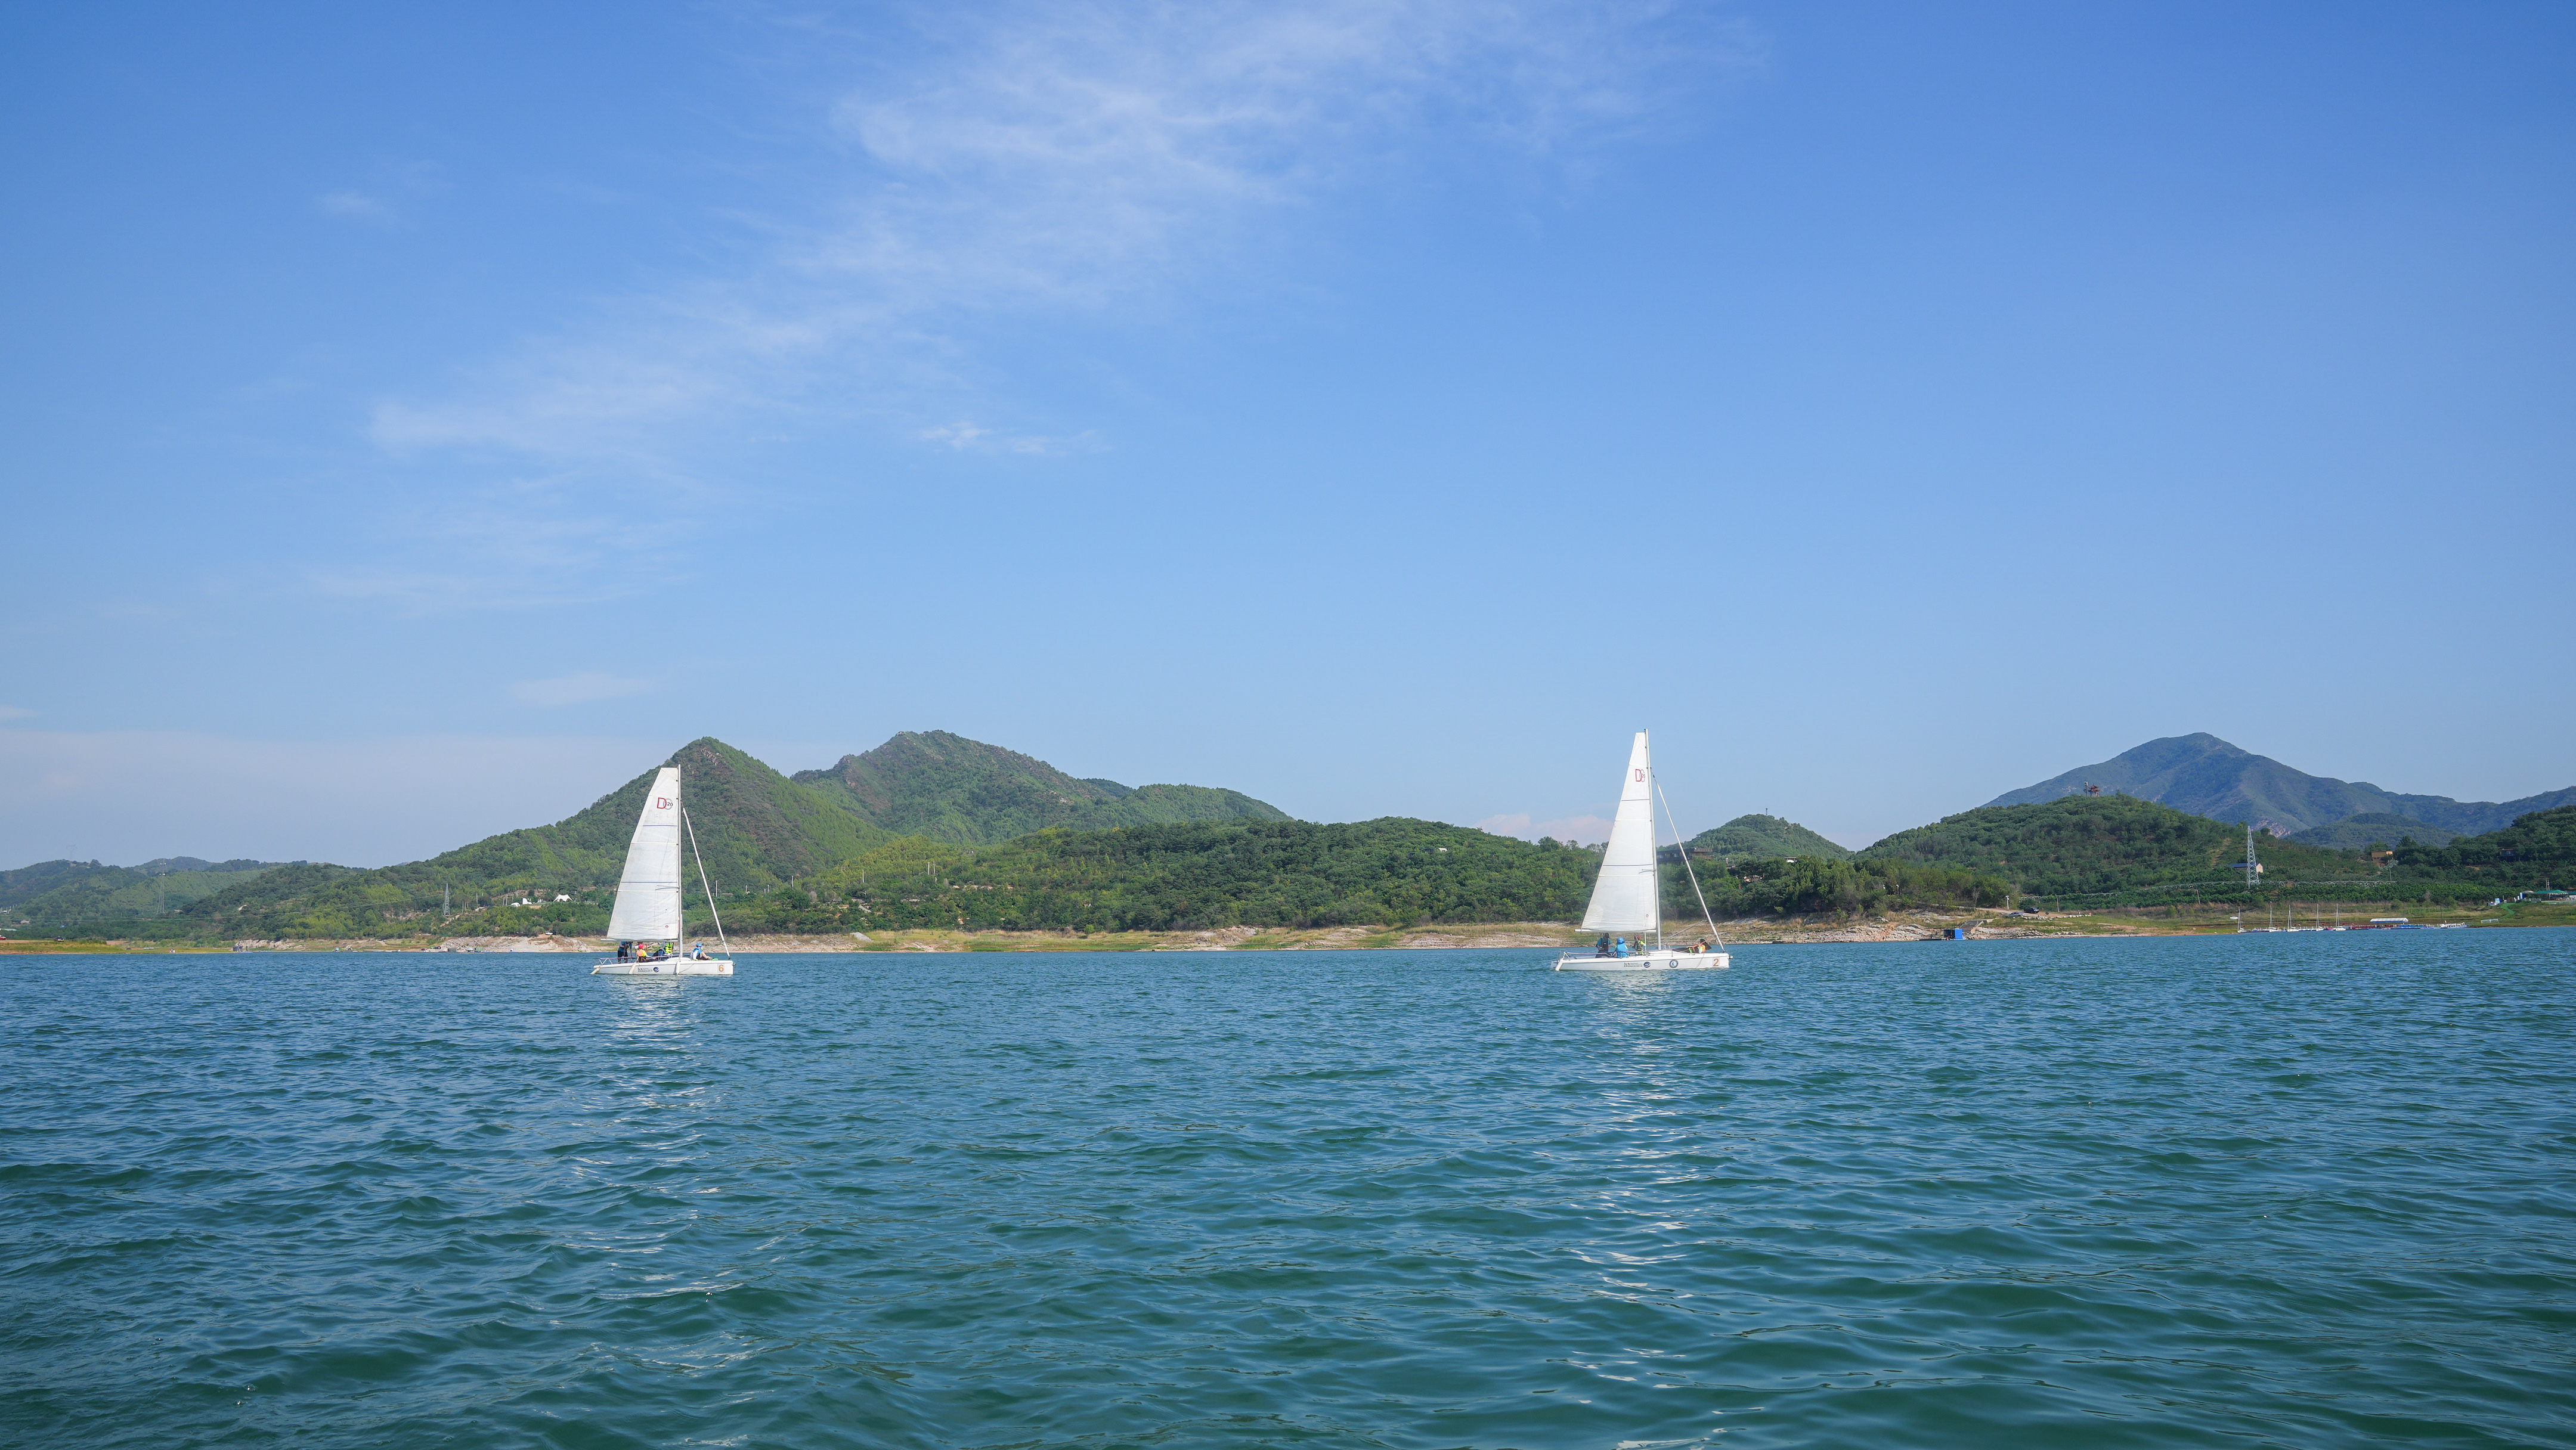 Sailboats ride the waves on Beijing's Jinhai Lake